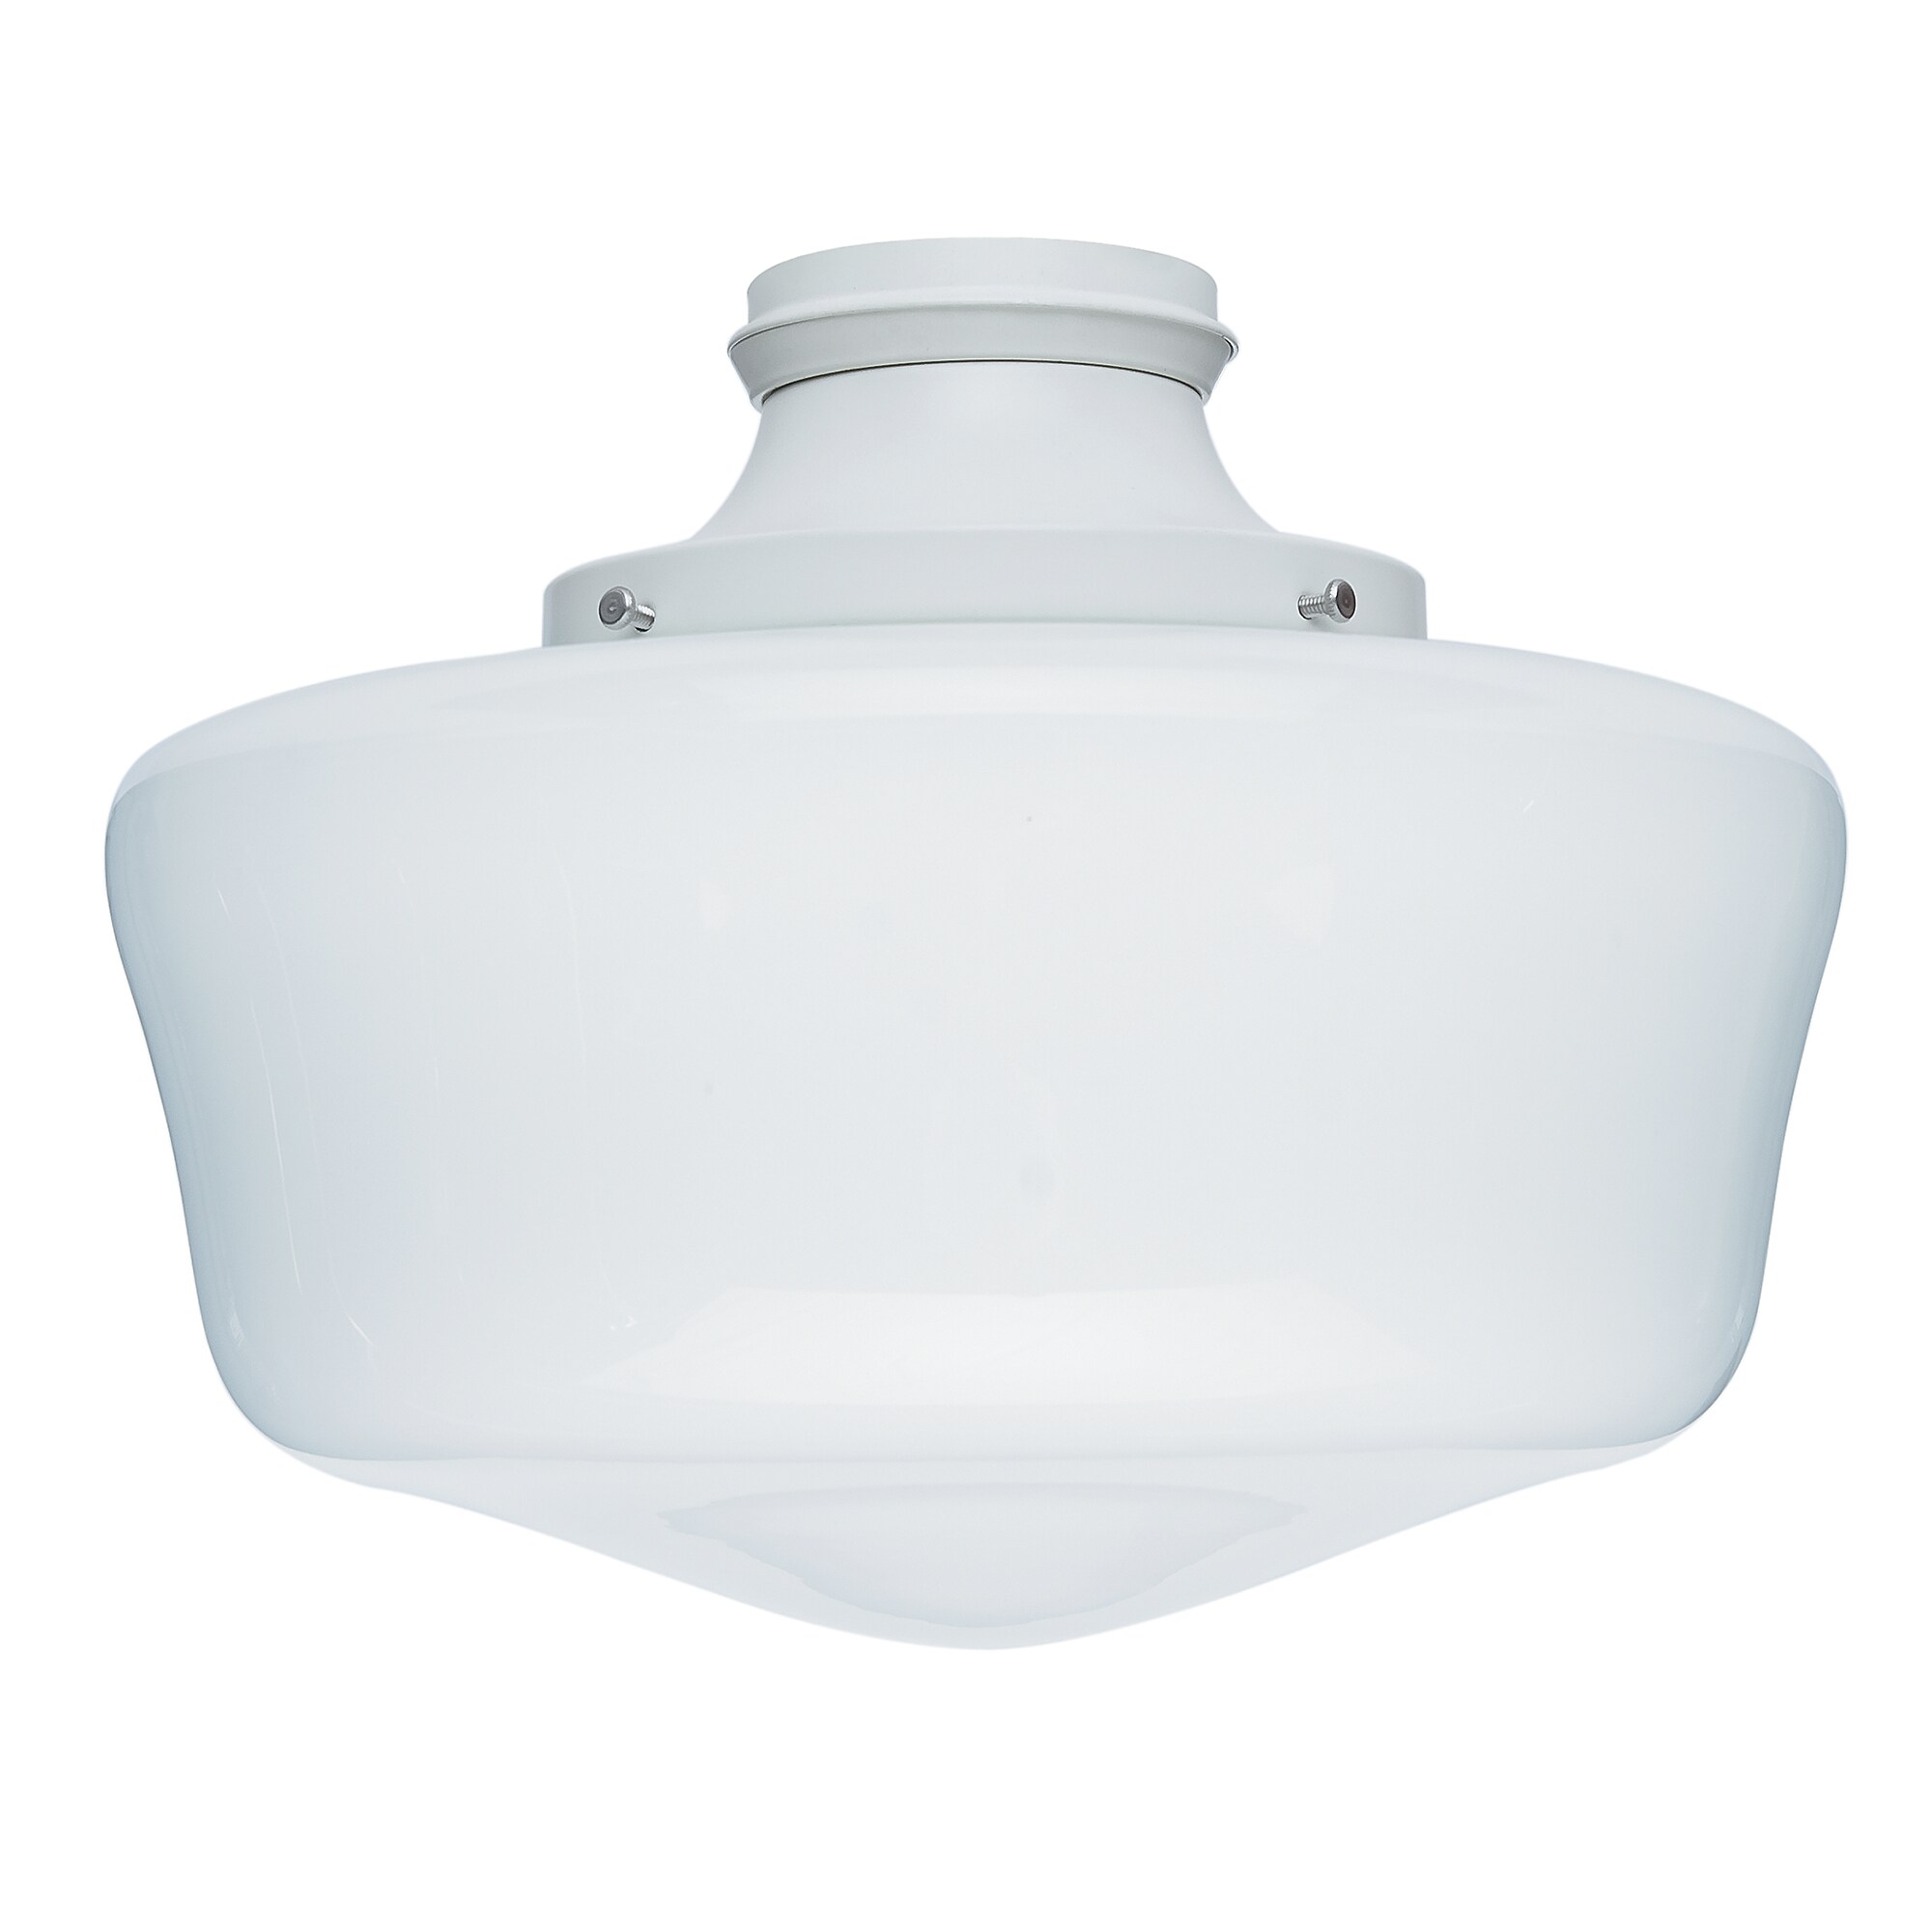 Details about   Light kit for HUNTER OUTDOOR ceiling fans 